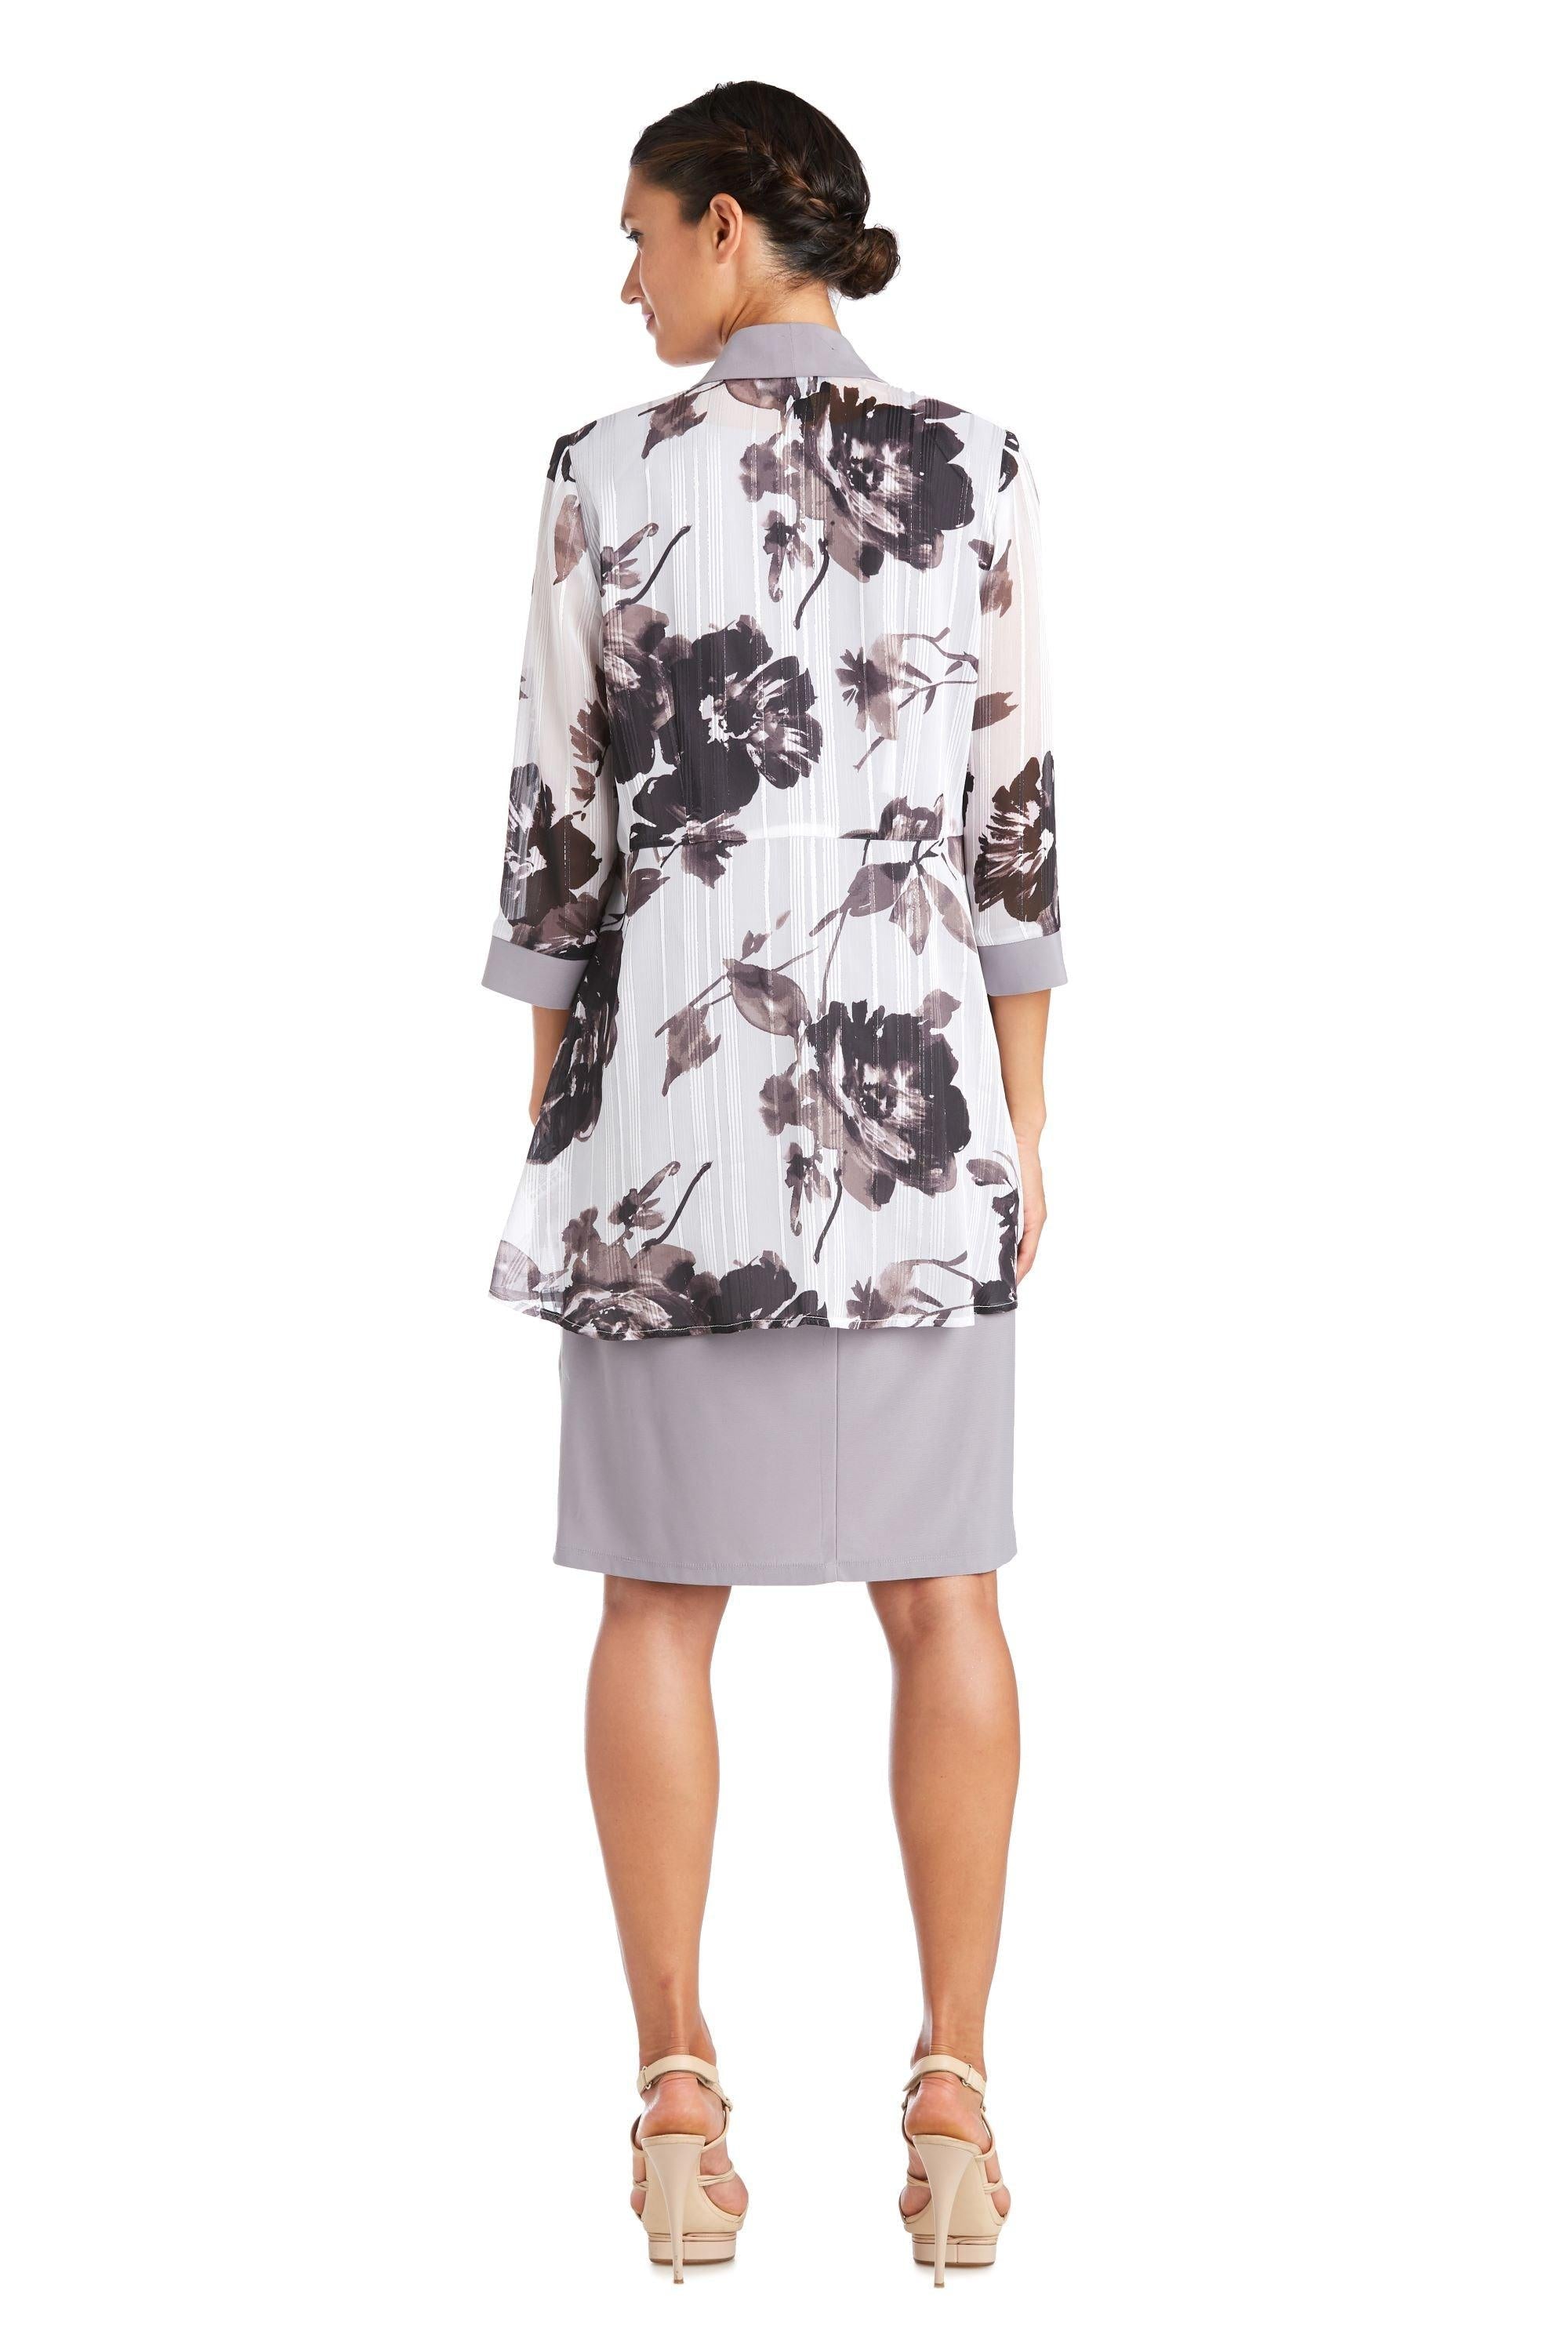 R&M Richards 7149 Short Piece Print Jacket Dress | The Dress Outlet